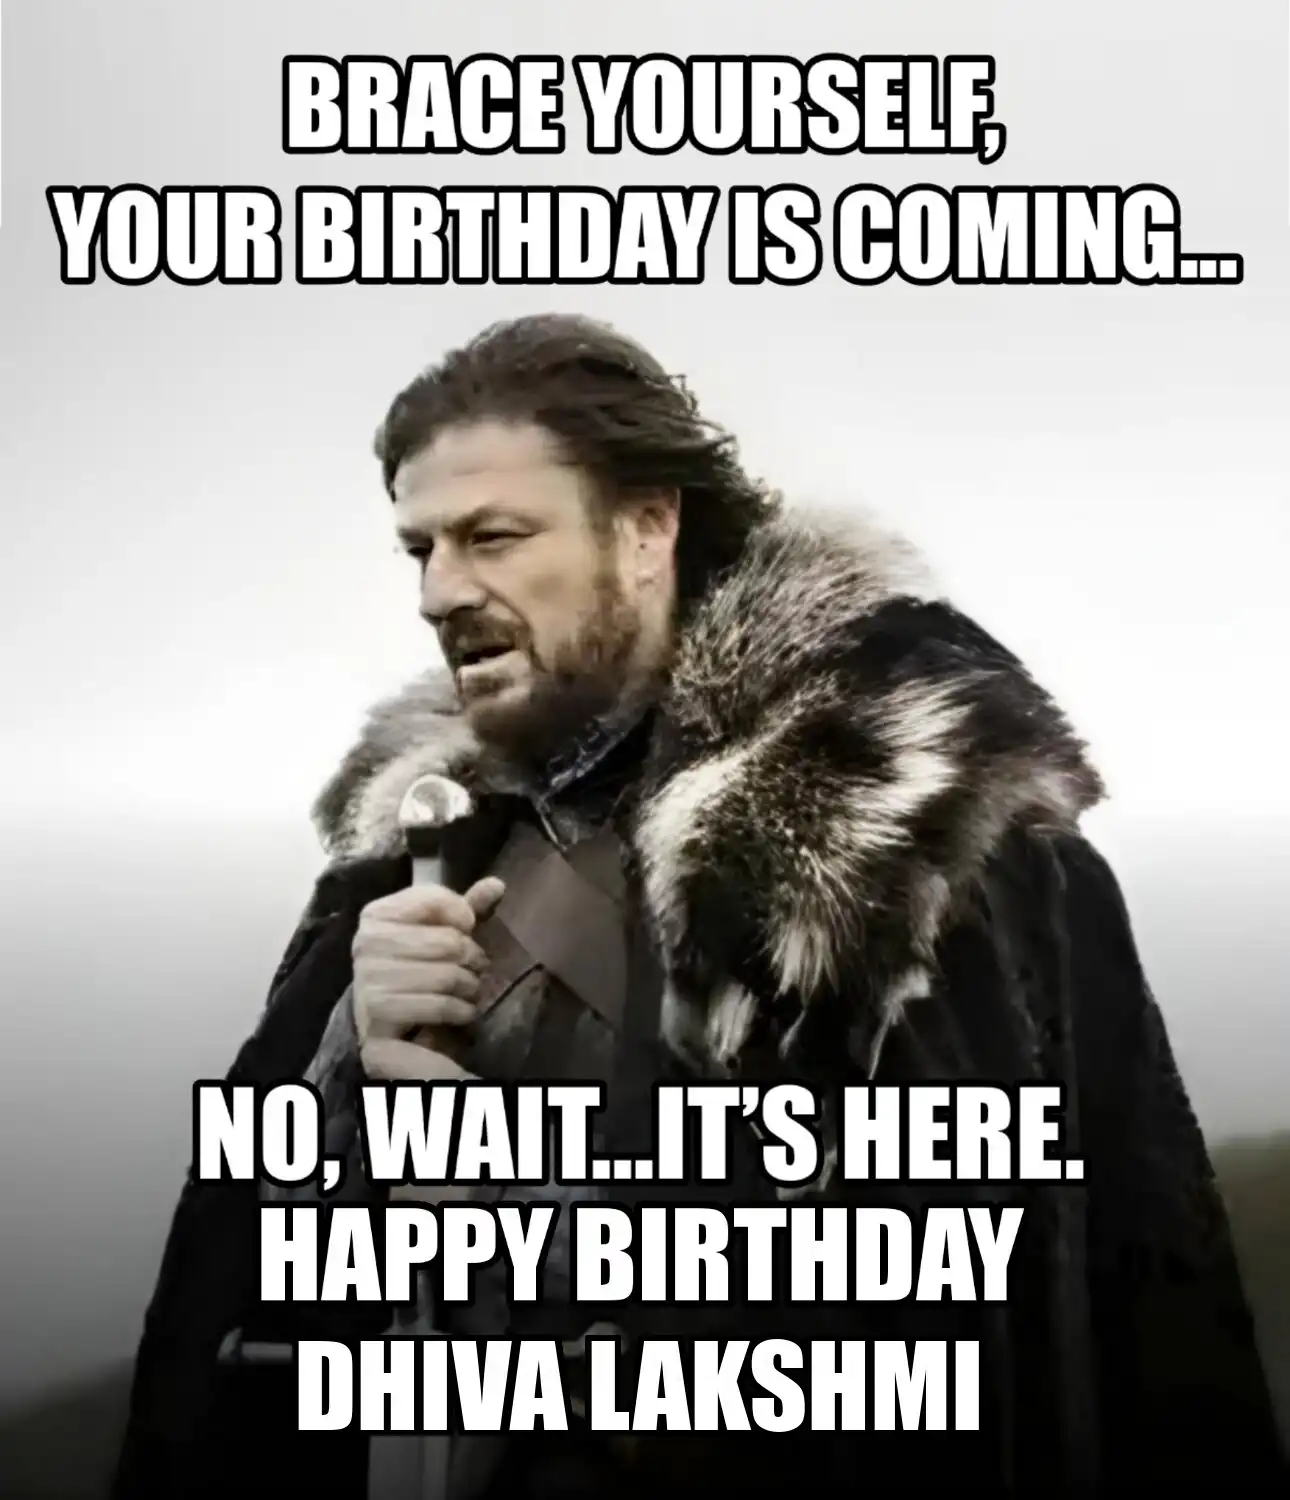 Happy Birthday Dhiva lakshmi Brace Yourself Your Birthday Is Coming Meme